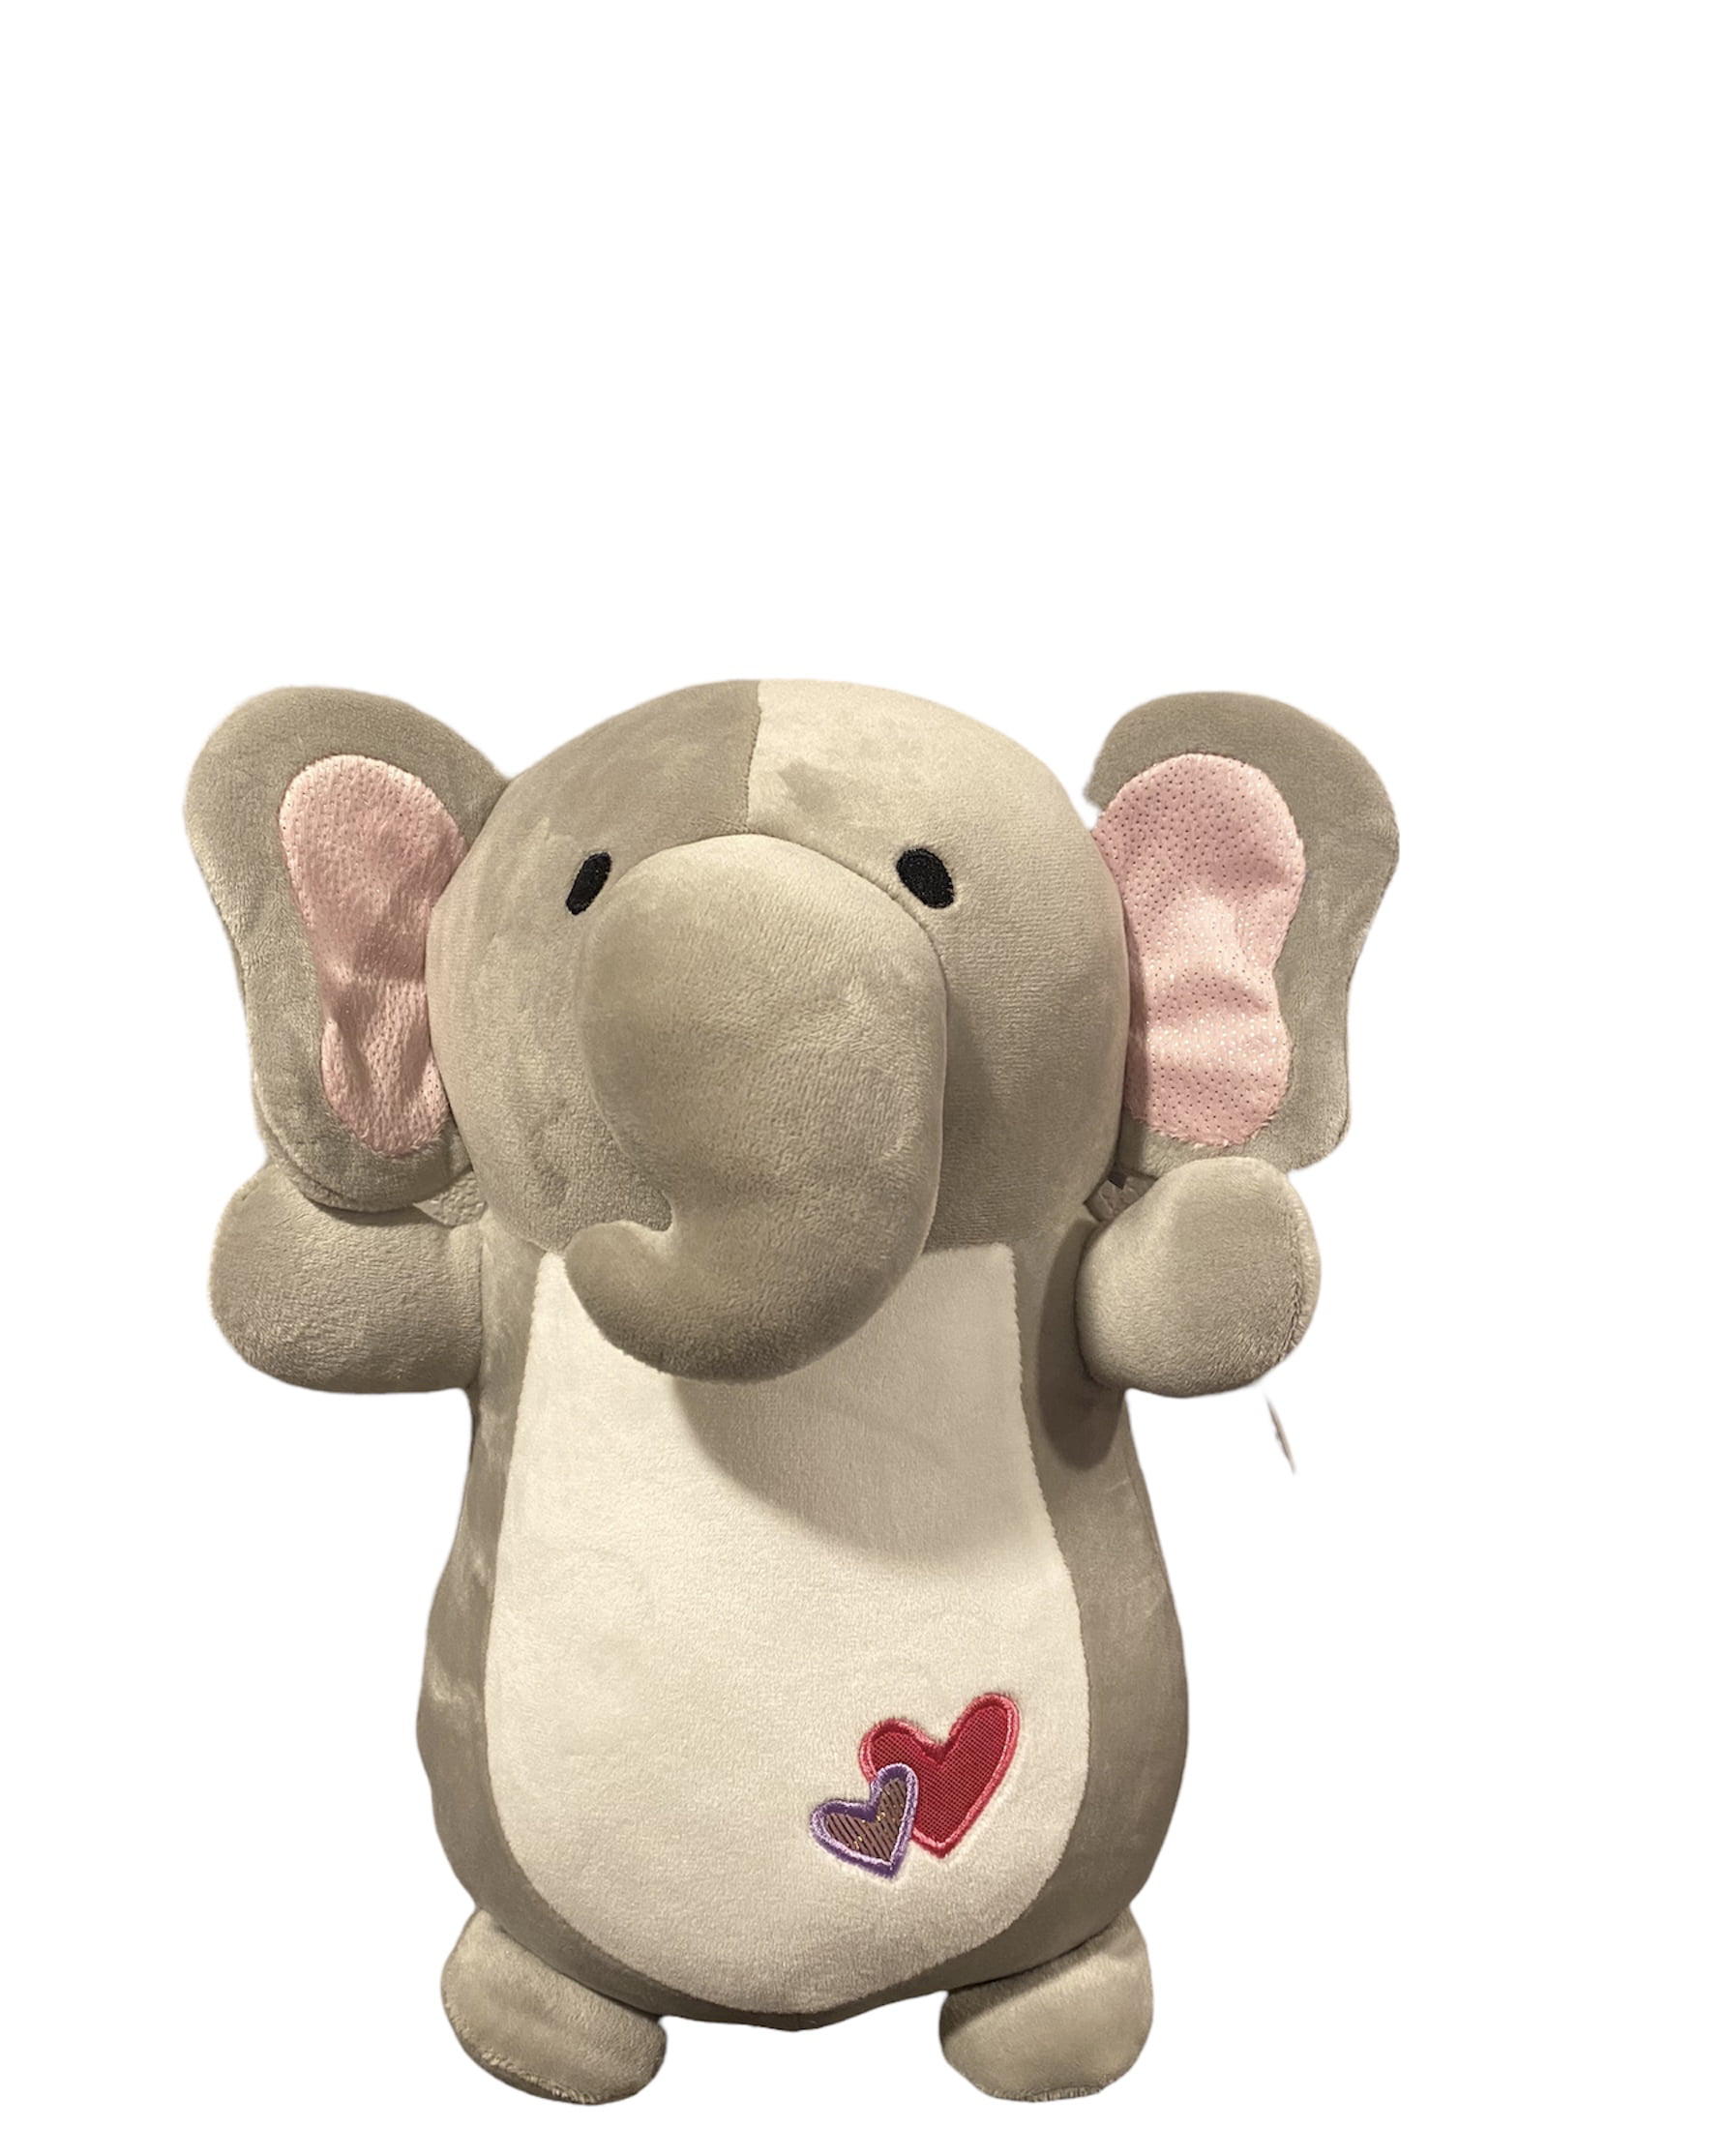 Squishmallows 16" Ellie the Elephant plush kellytoy valentine's limited edition 